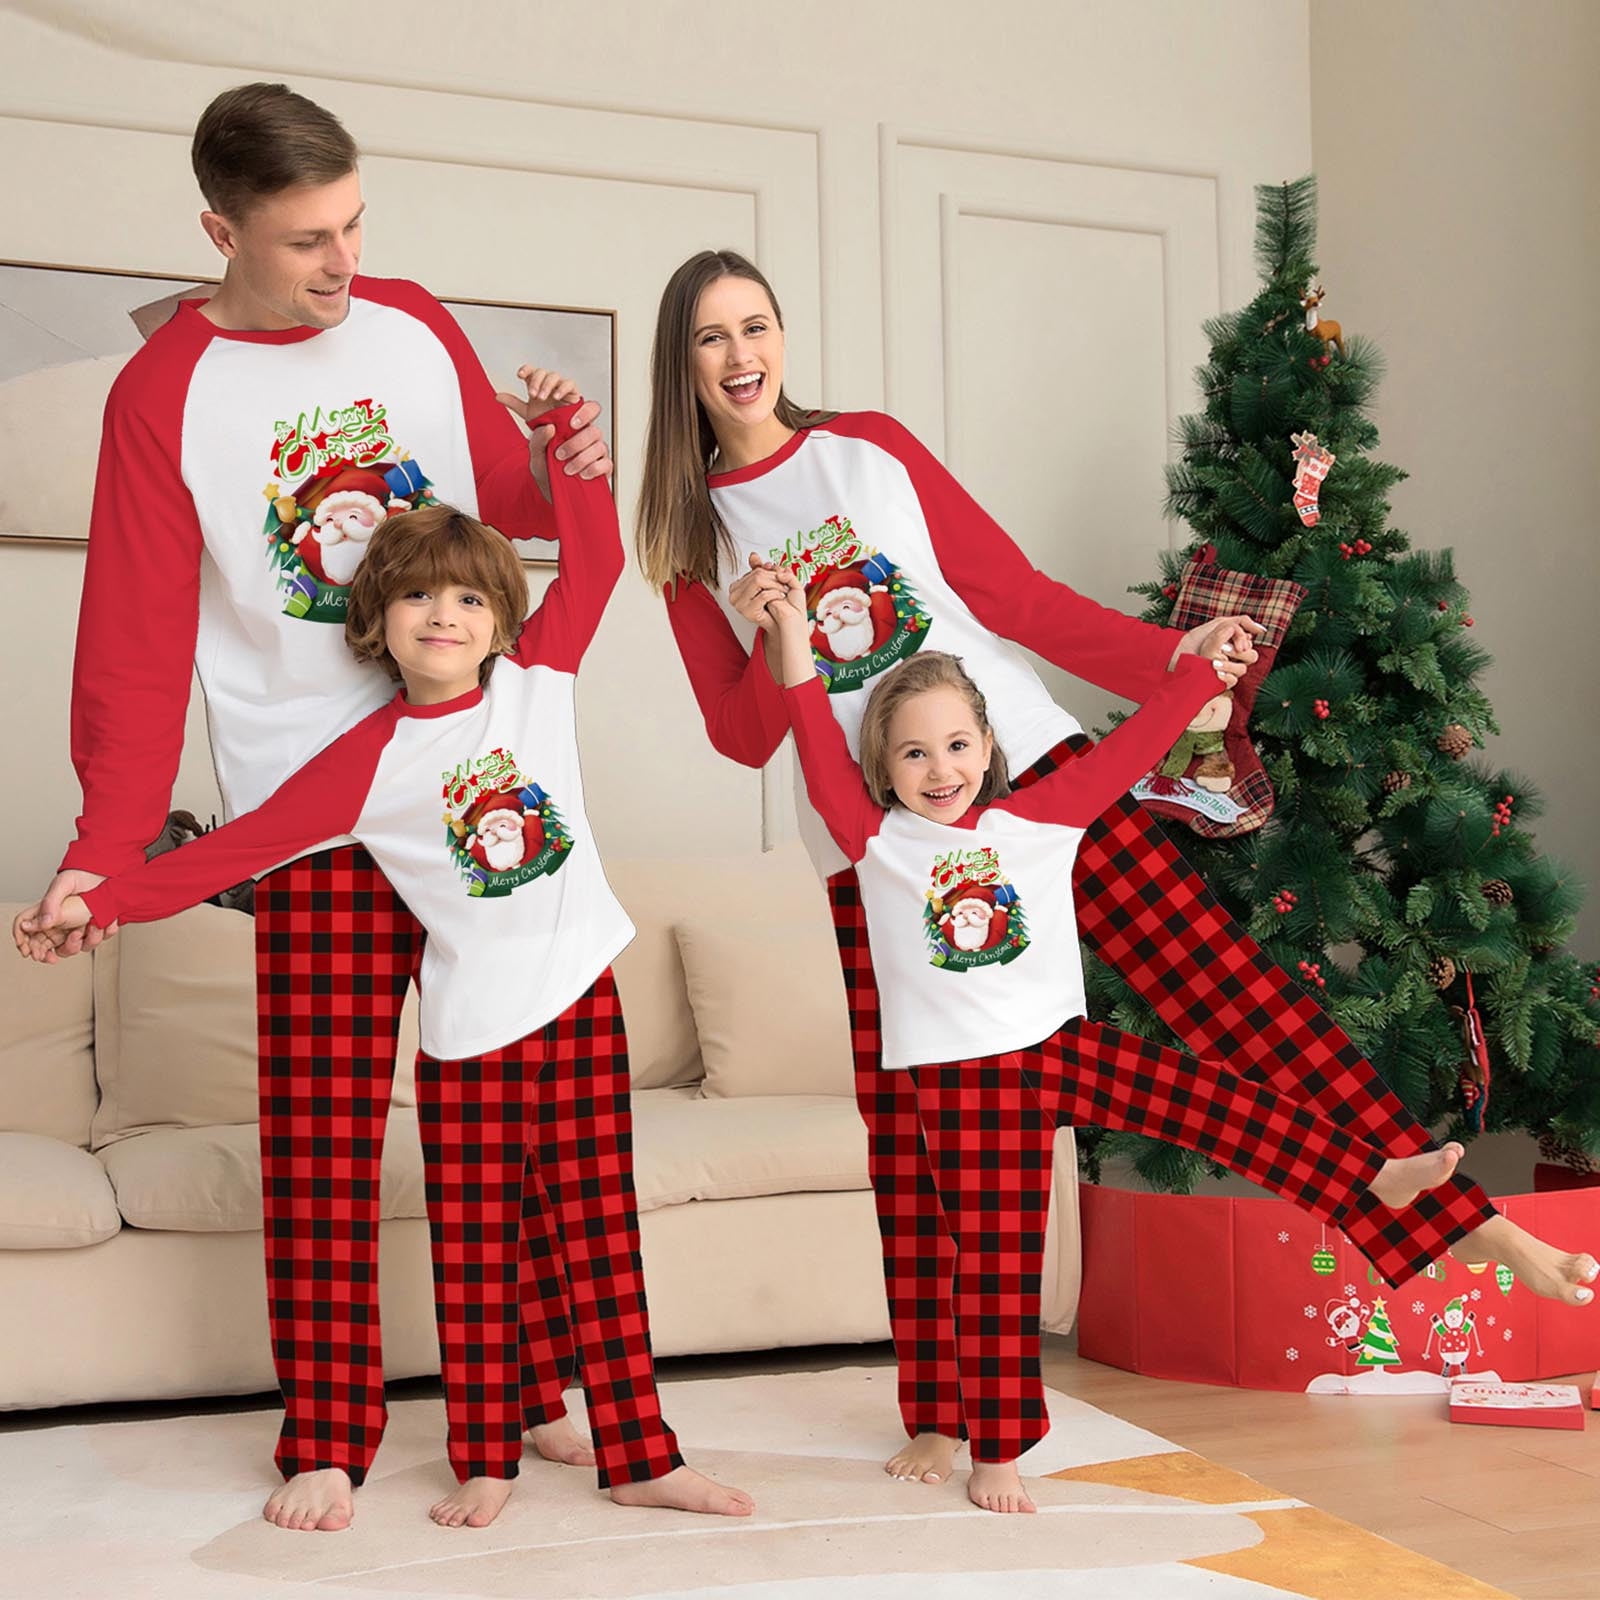 Matching Thanksgiving Gender-Neutral Snug-Fit Pajama Set For Kids